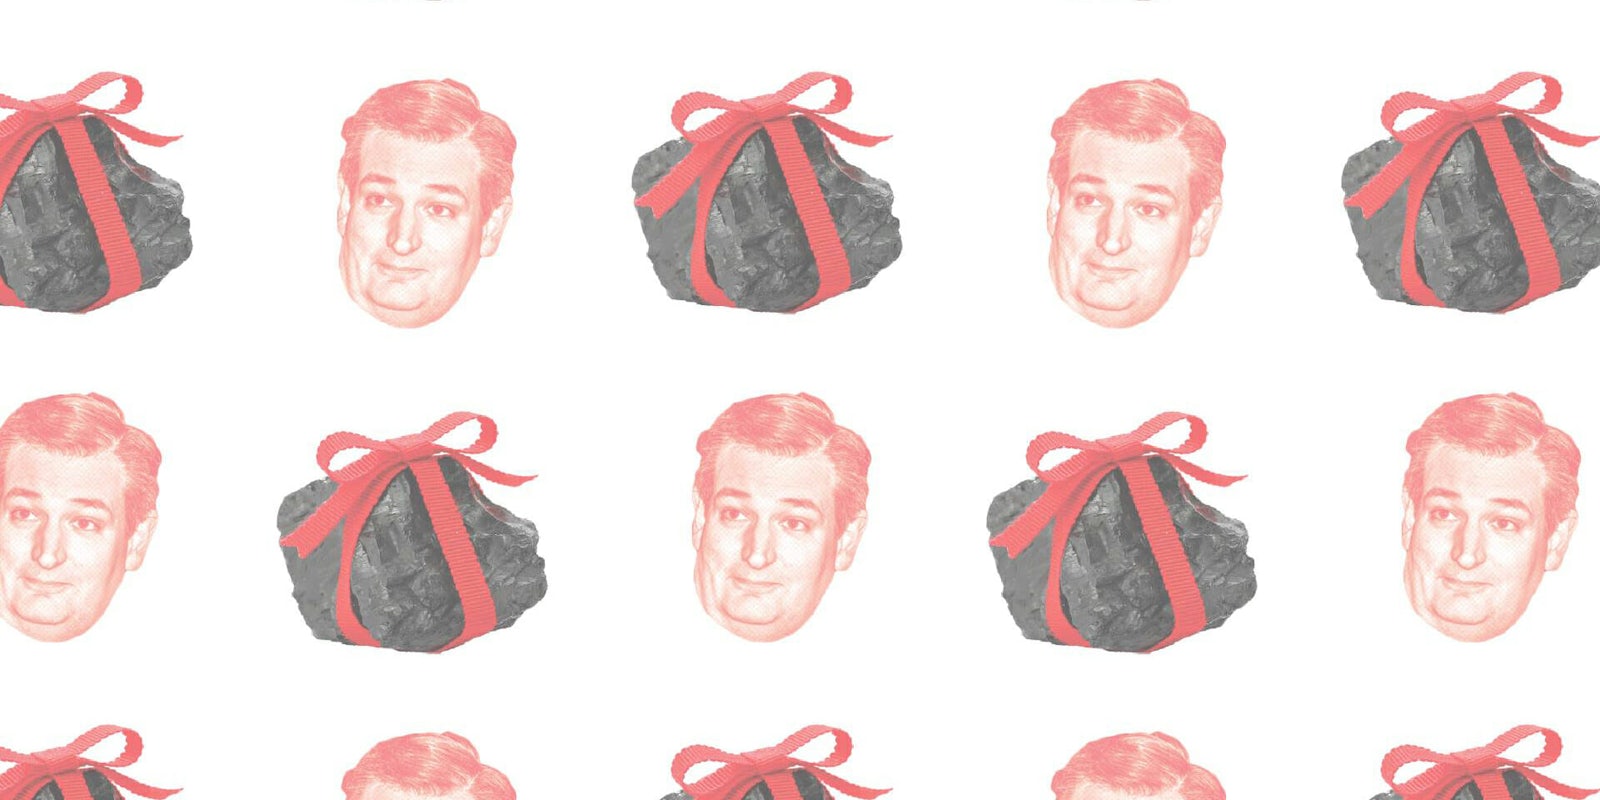 Ted Cruz and coal